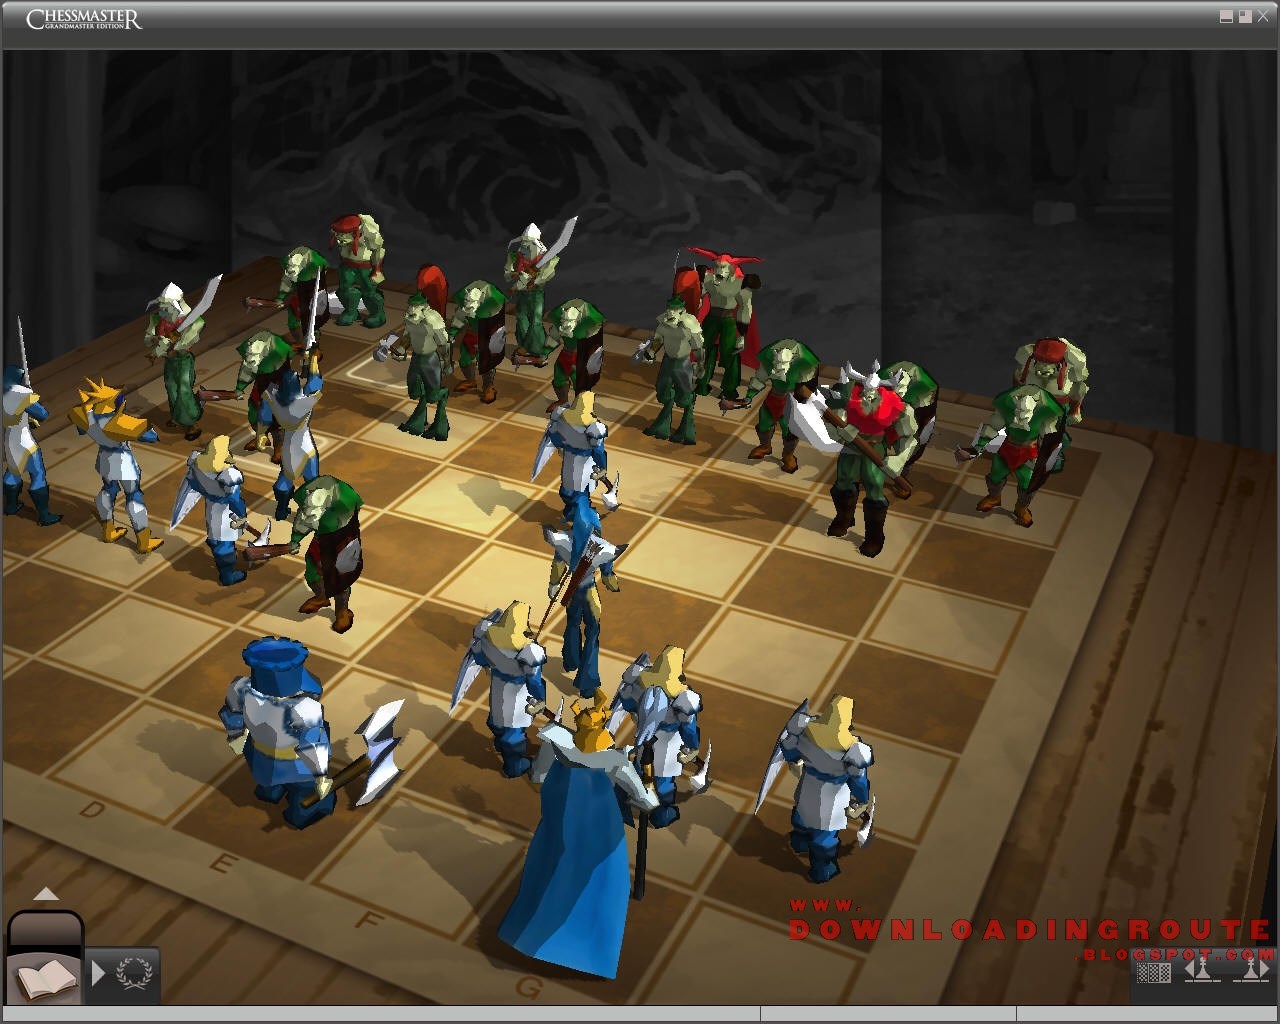 chessmaster grandmaster edition download full